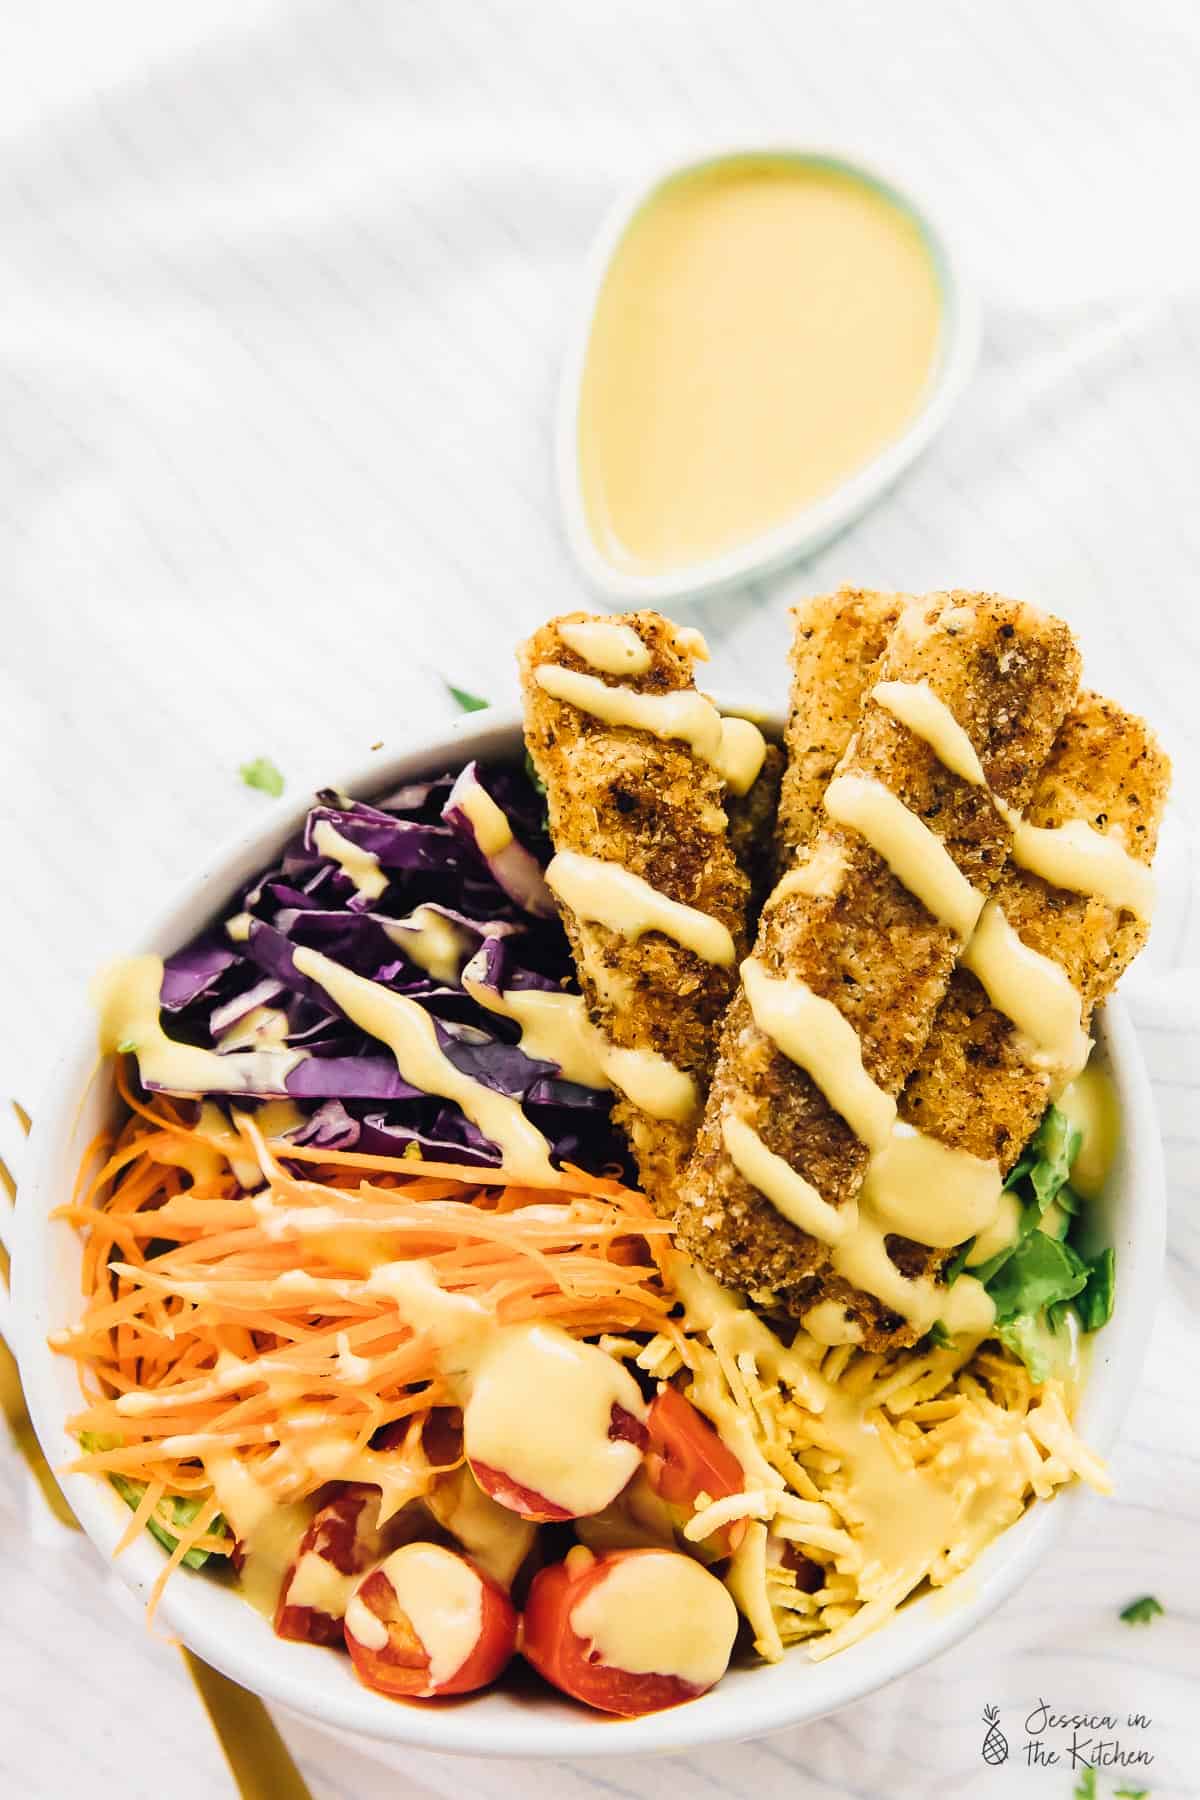 Overhead view of vegan crispy cajun fried chicken salad, drizzled with honey mustard dressing.